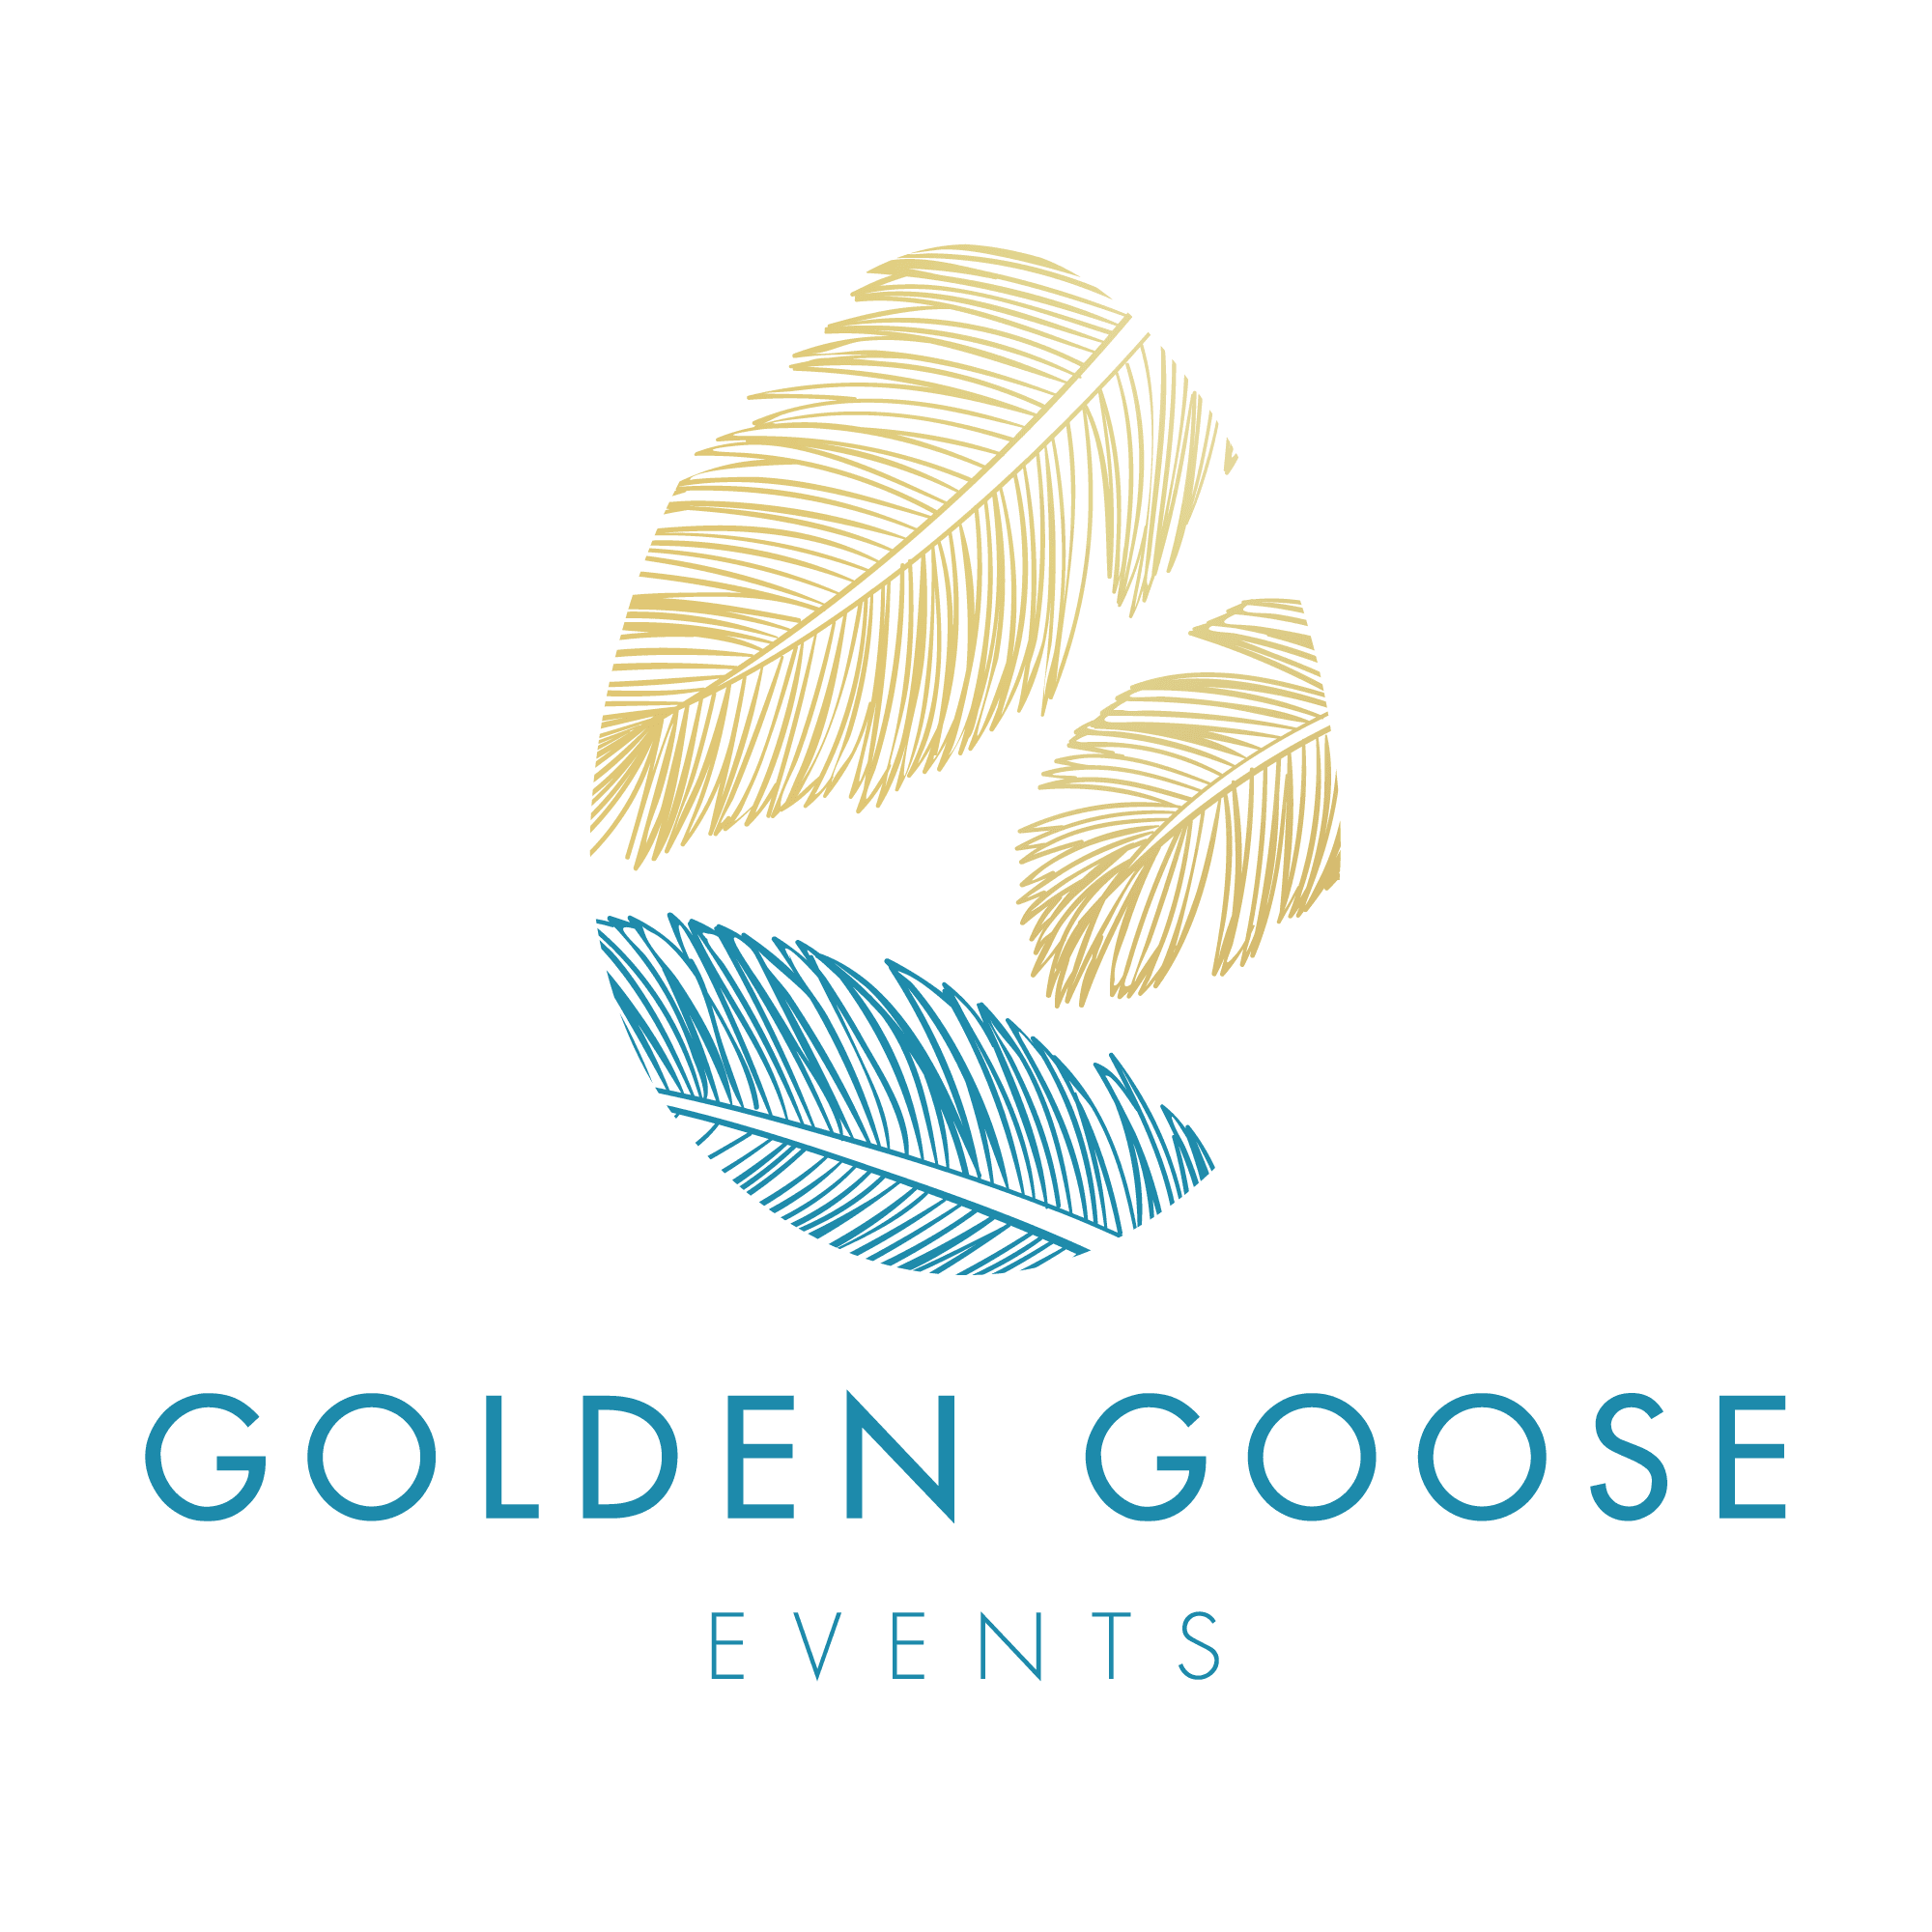 Golden Goose Events logo